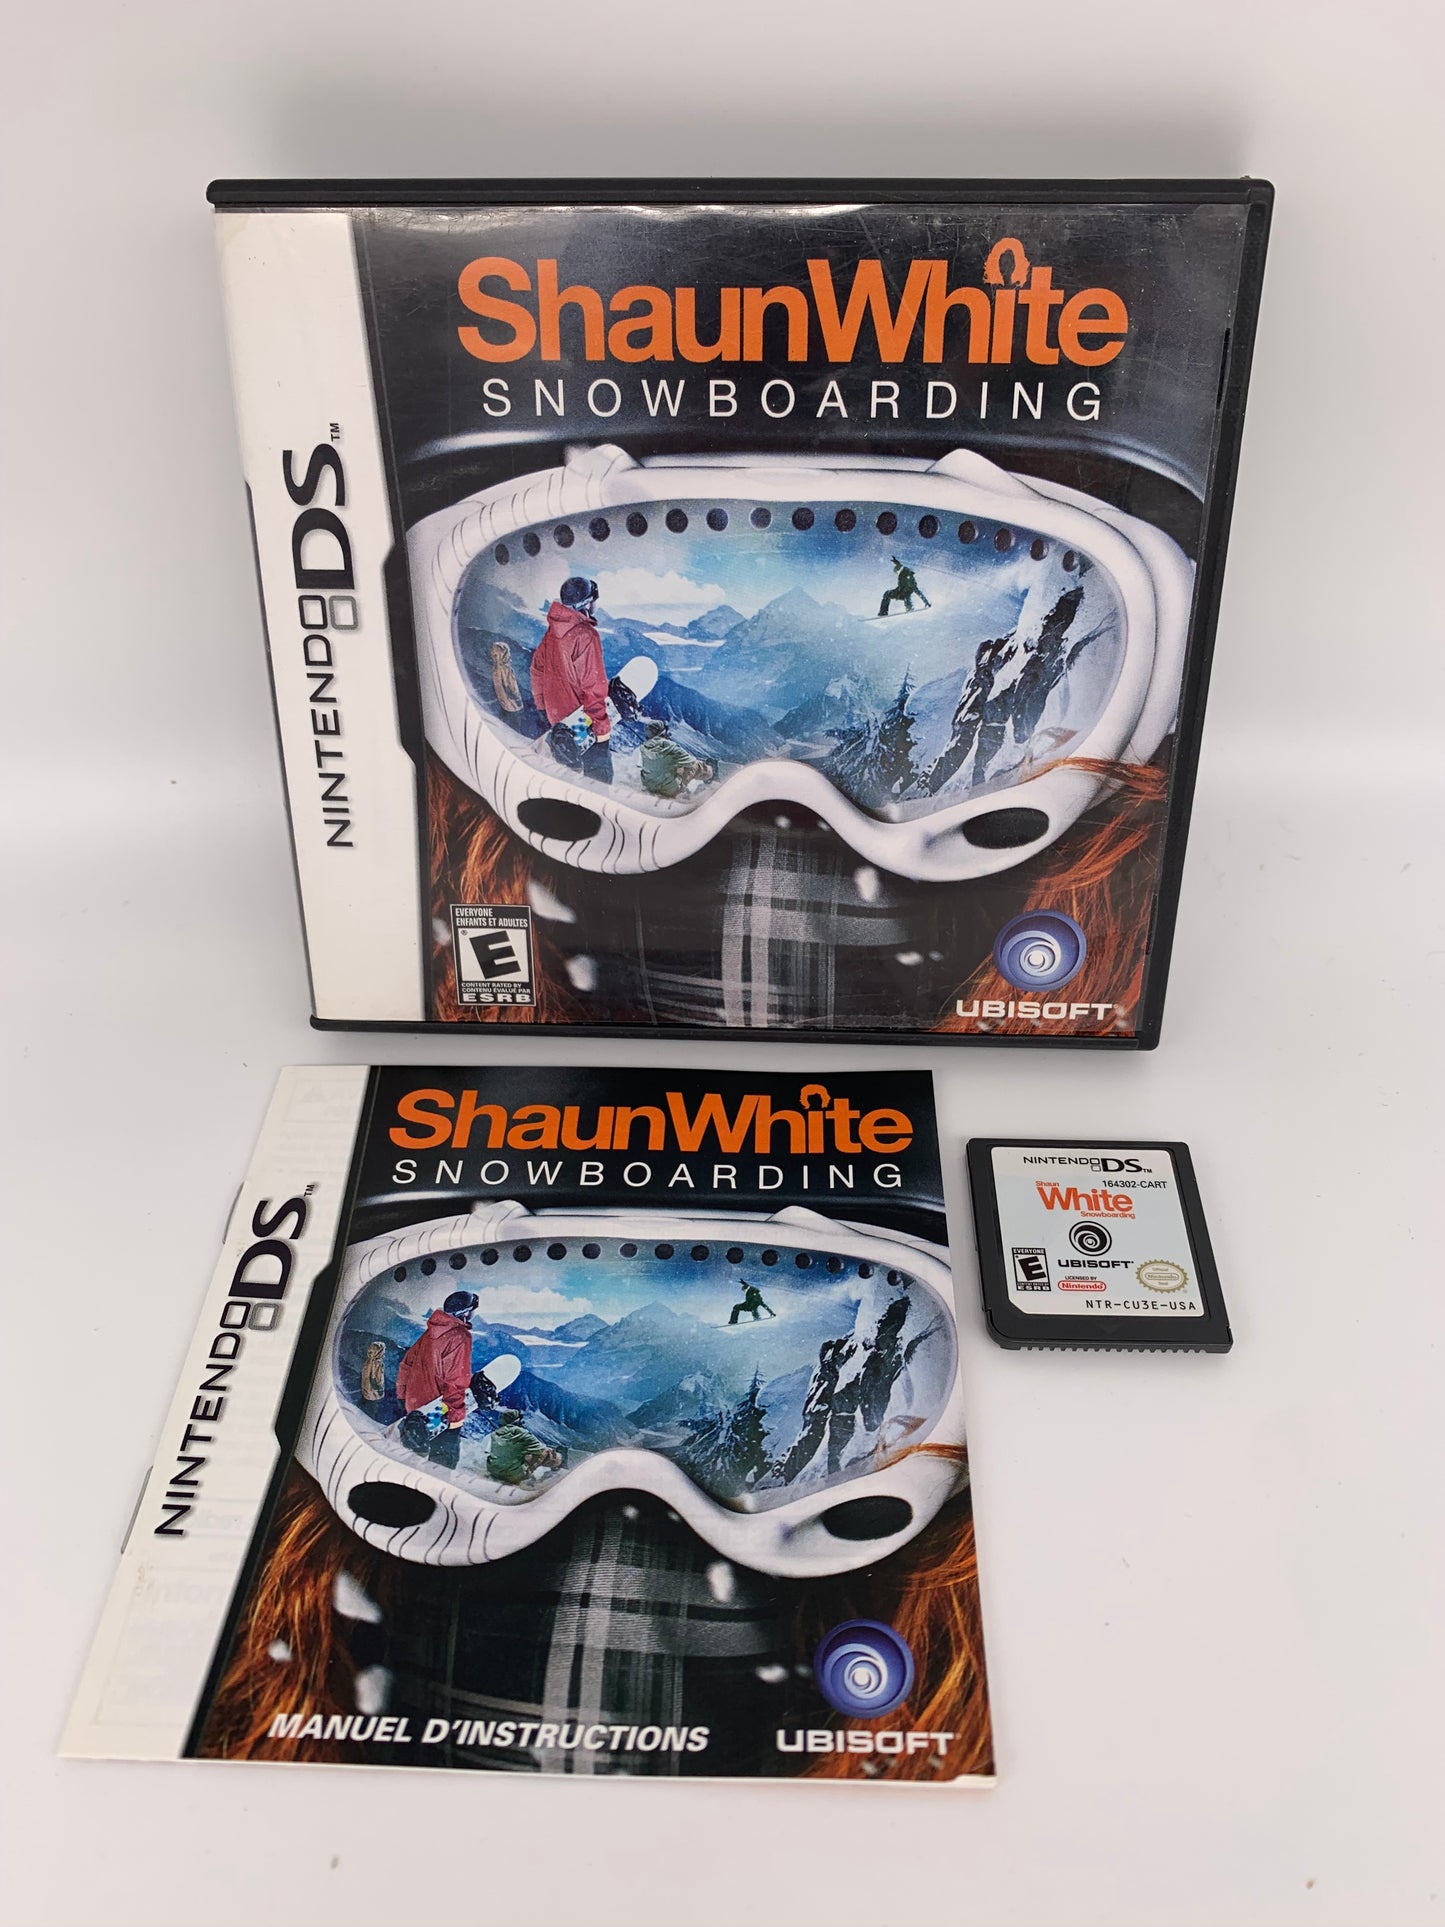 PiXEL-RETRO.COM : NINTENDO DS (DS) COMPLETE CIB BOX MANUAL GAME NTSC SHAUN WHITE SNOWBOARDING